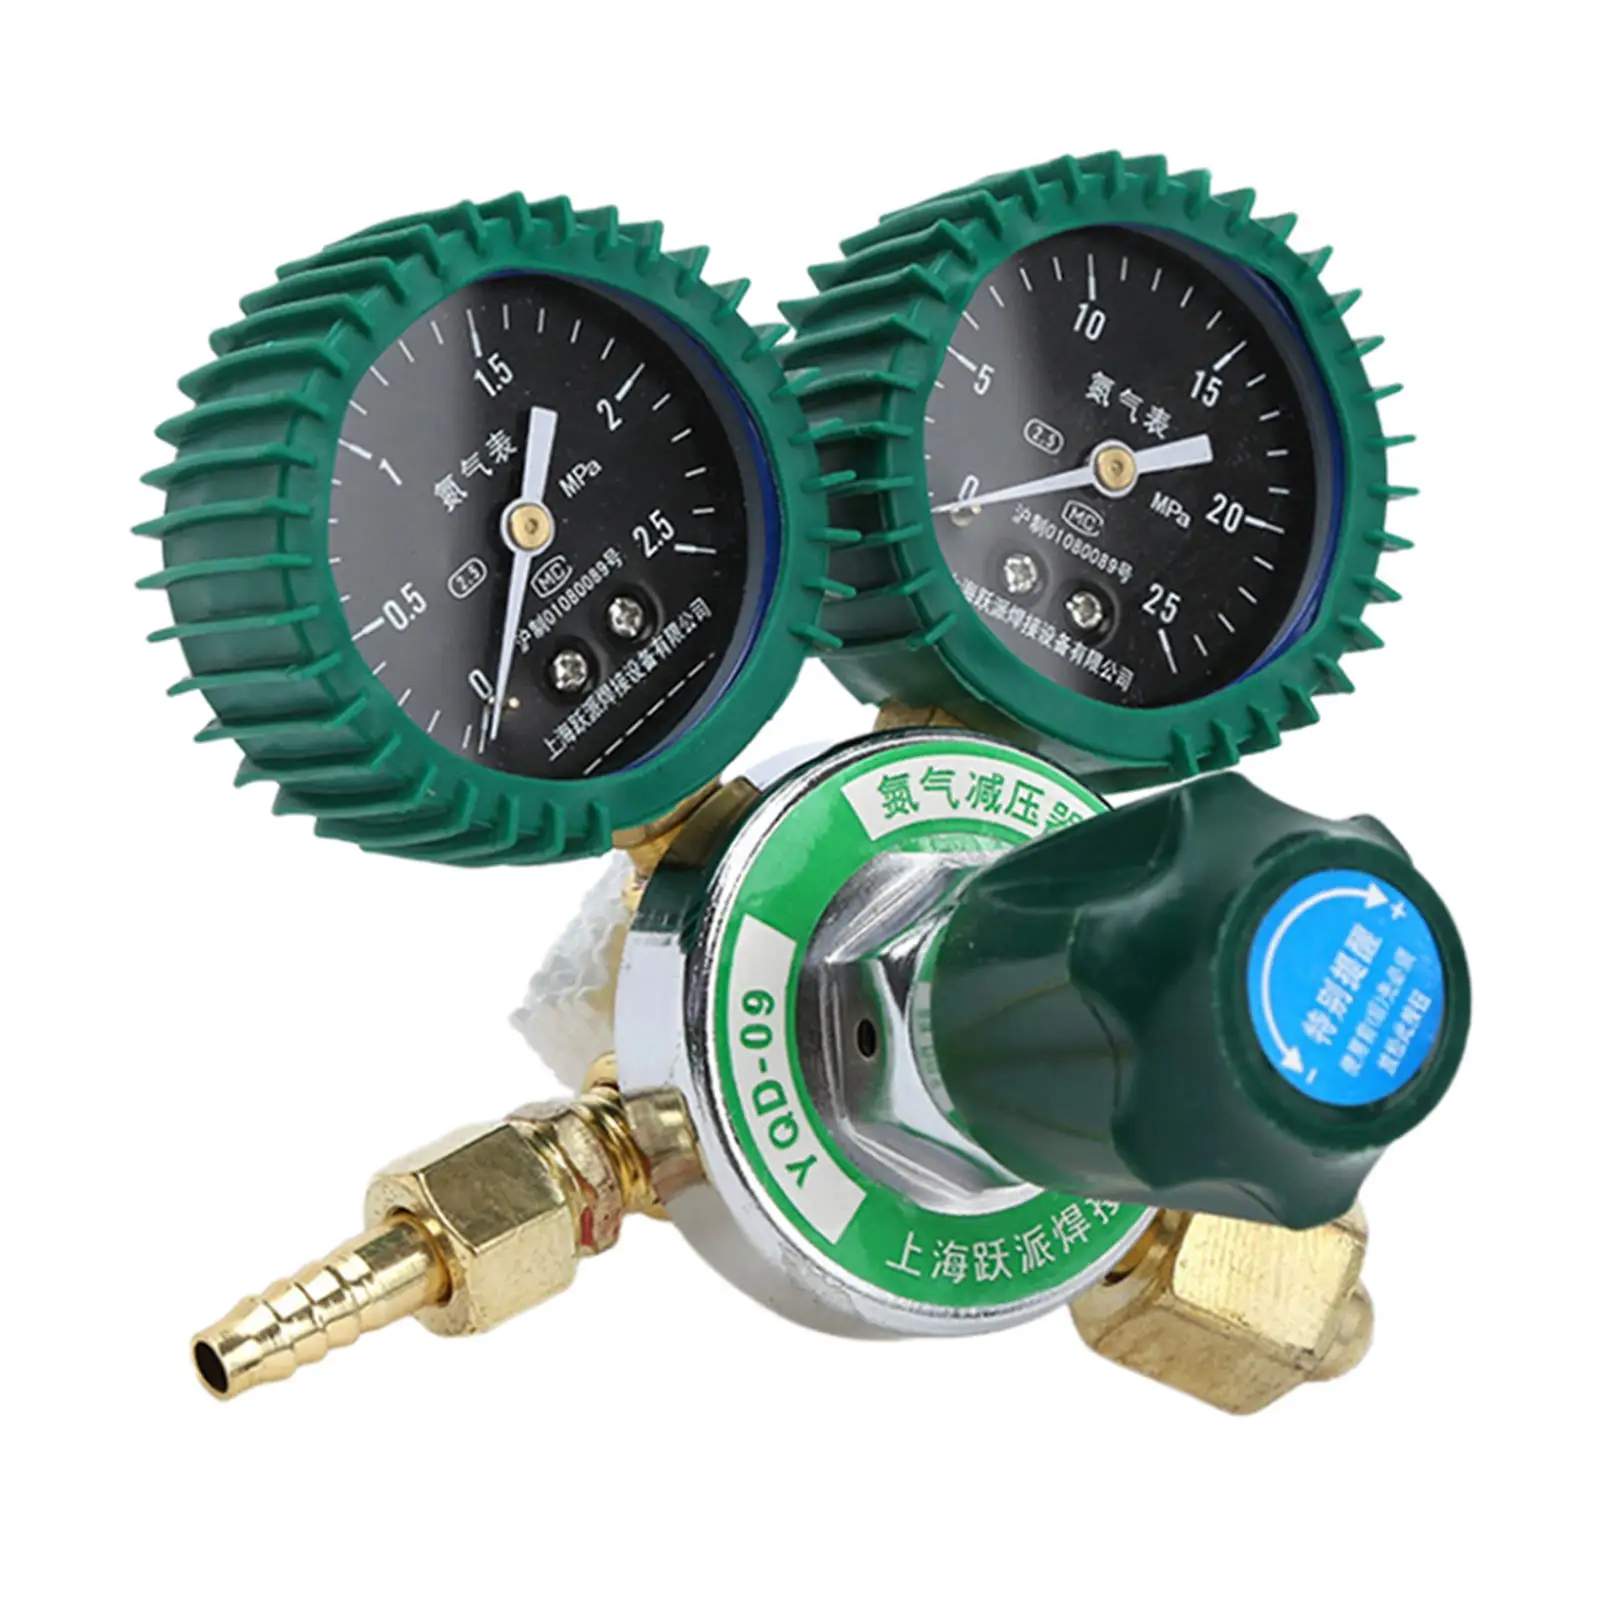 Brass Accurate Nitrogen Pressure Regulator Meter Nitrogen Kit for Welders